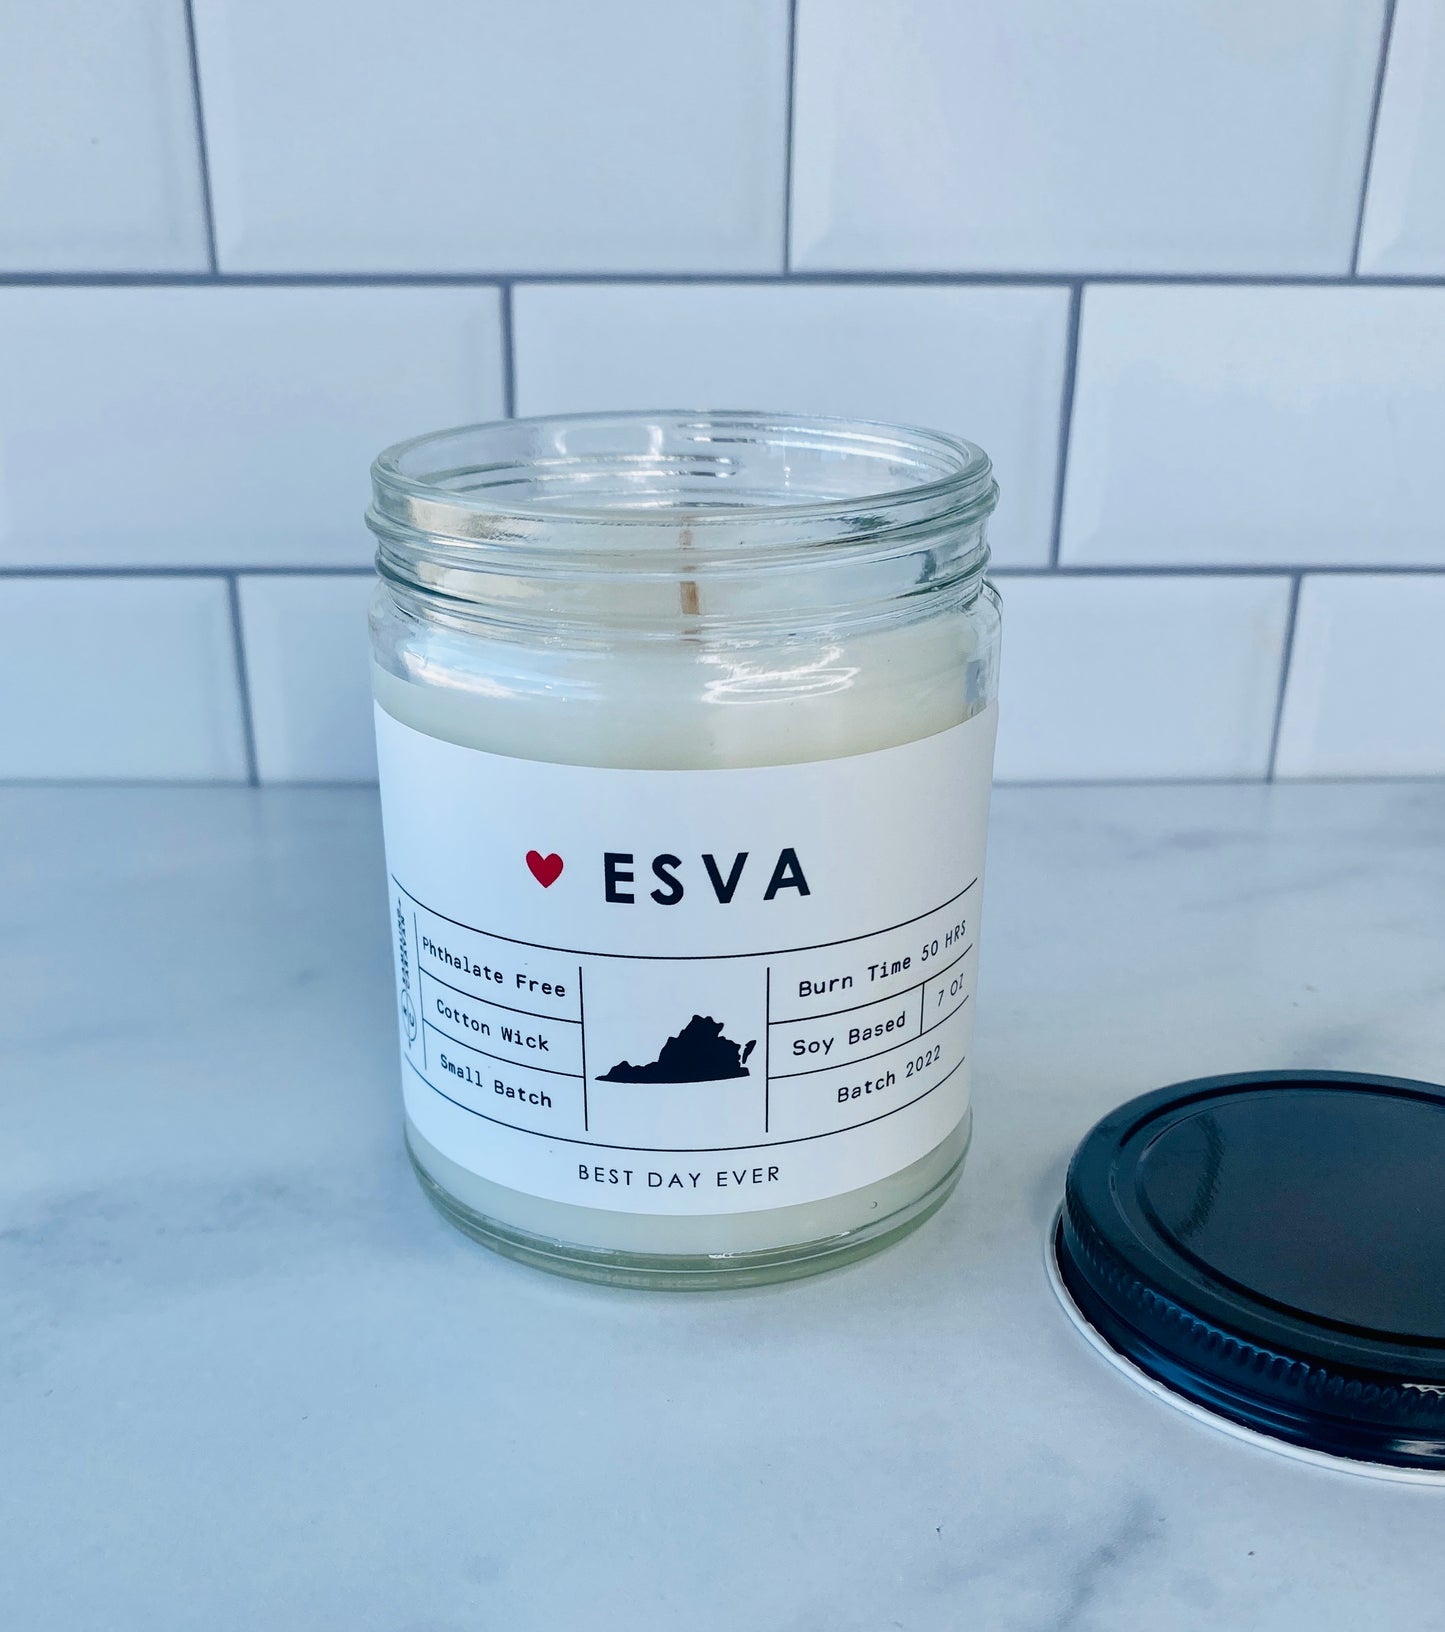 ESVA (Eastern Shore, VA) Candle